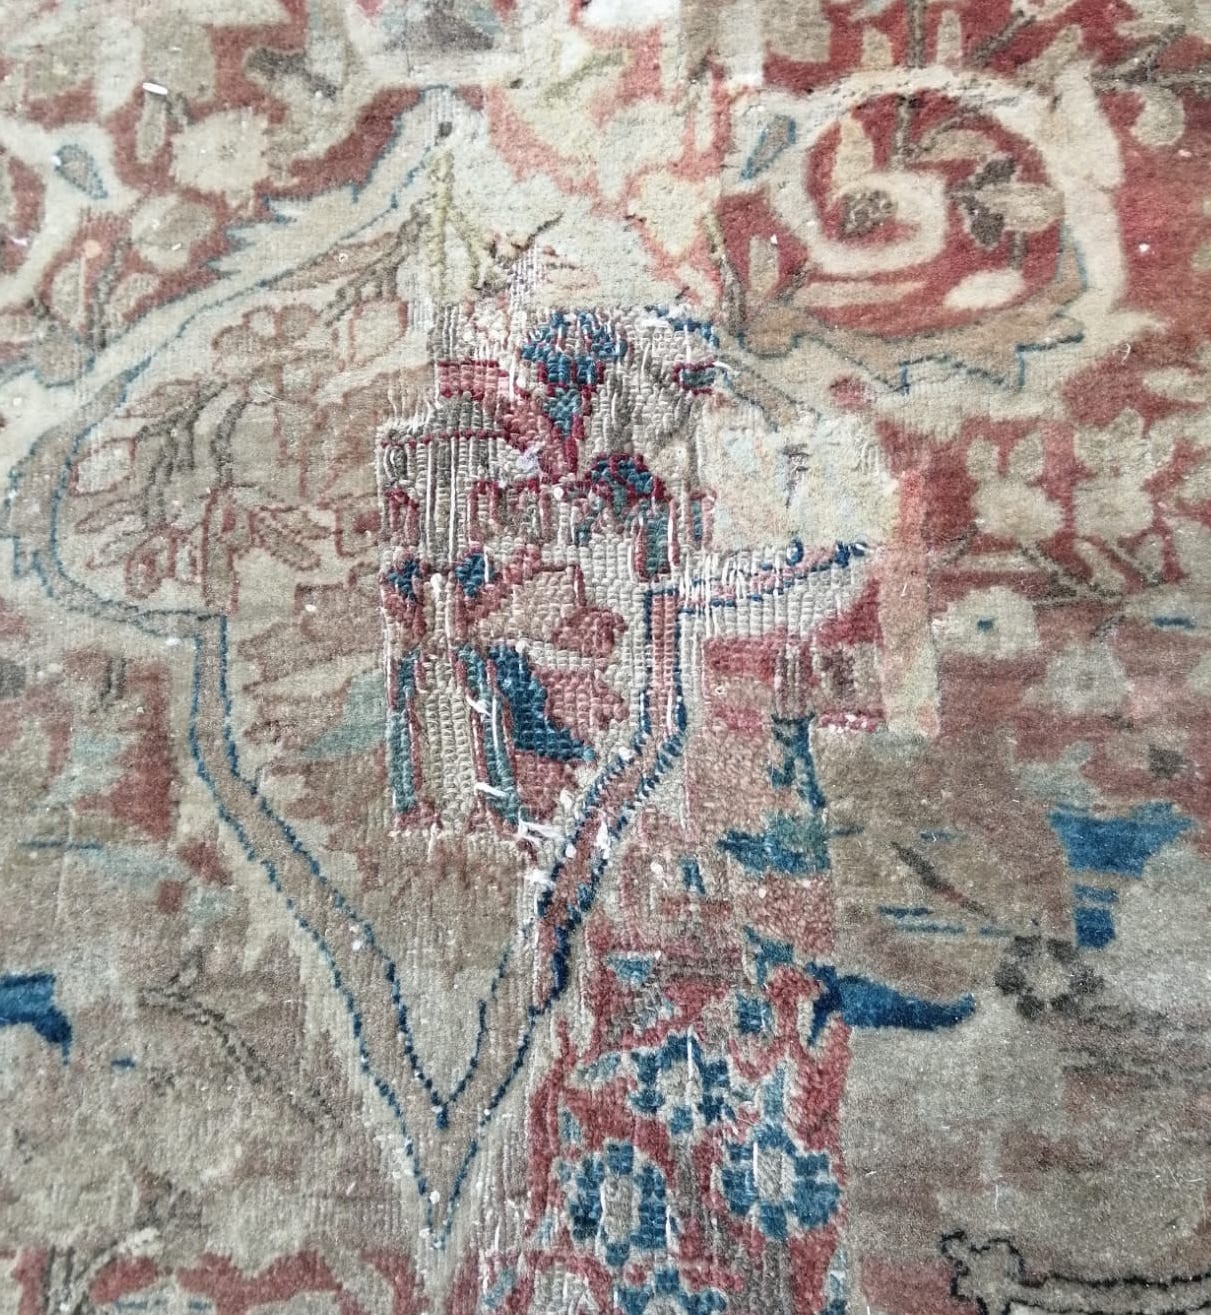 A fine Persian cream ground carpet, in distressed condition, 360 x 300cm